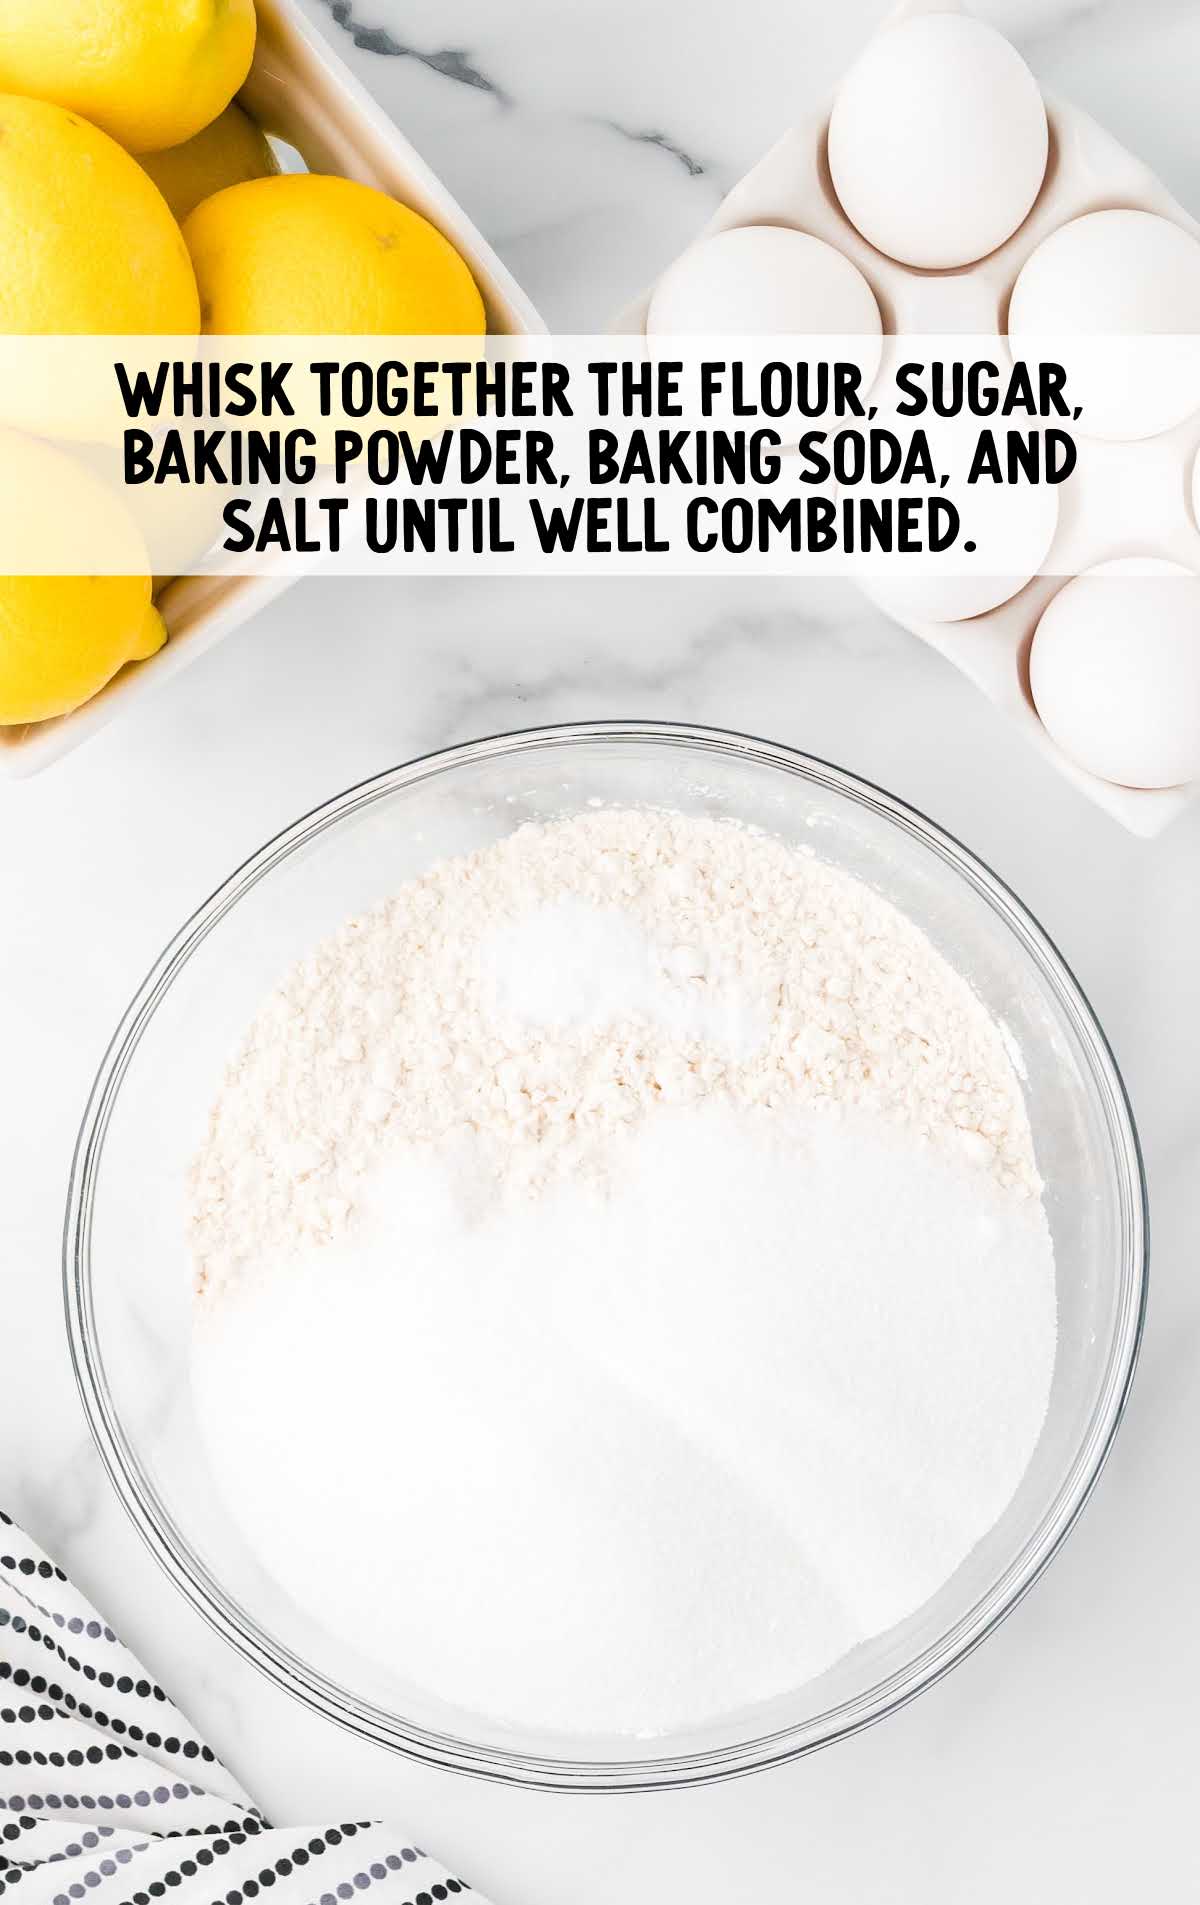 flour, sugar, baking powder, baking soda, and salt combined in a bowl